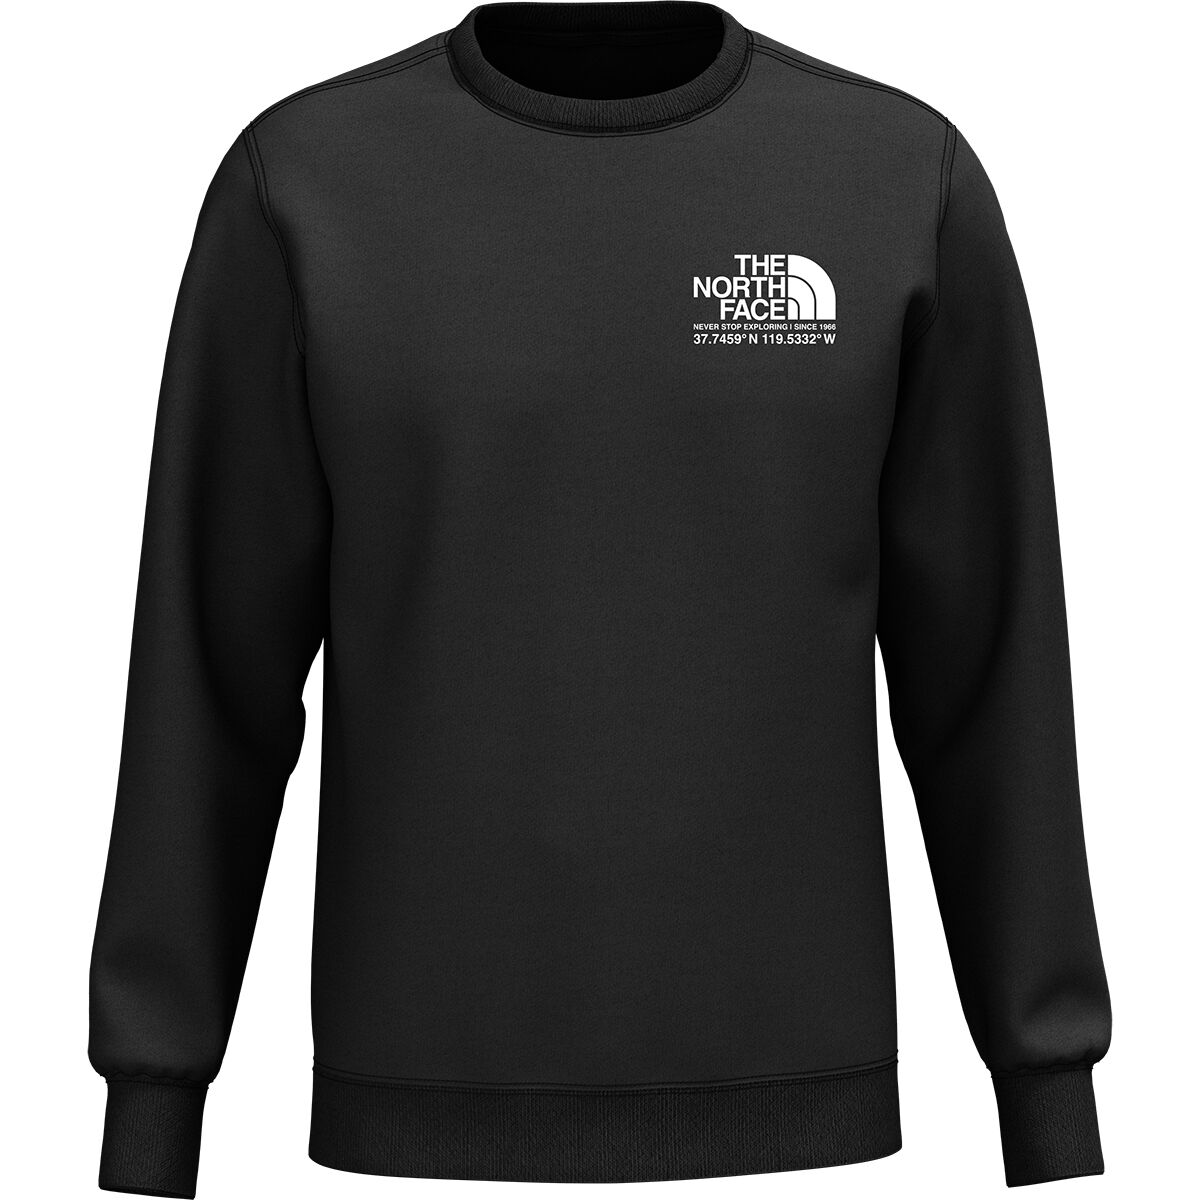 The North Face Coordinates Crew Sweatshirt - Men's | Backcountry.com